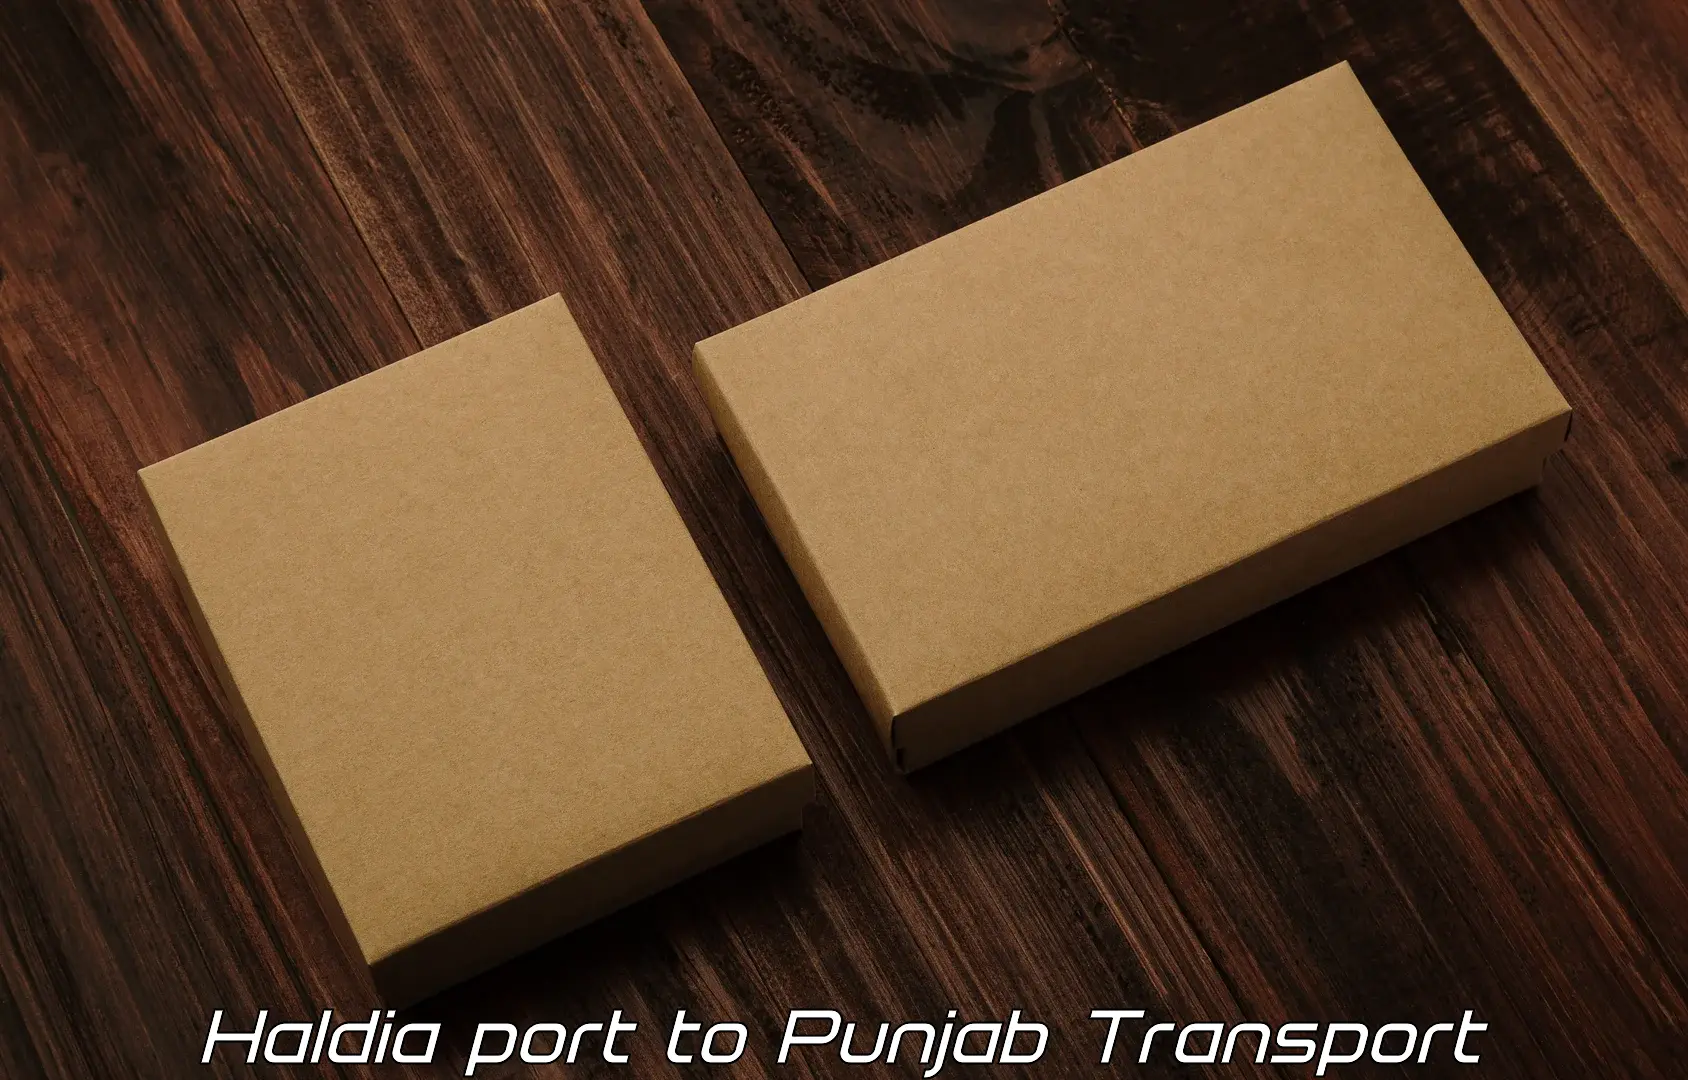 Two wheeler parcel service Haldia port to Raikot